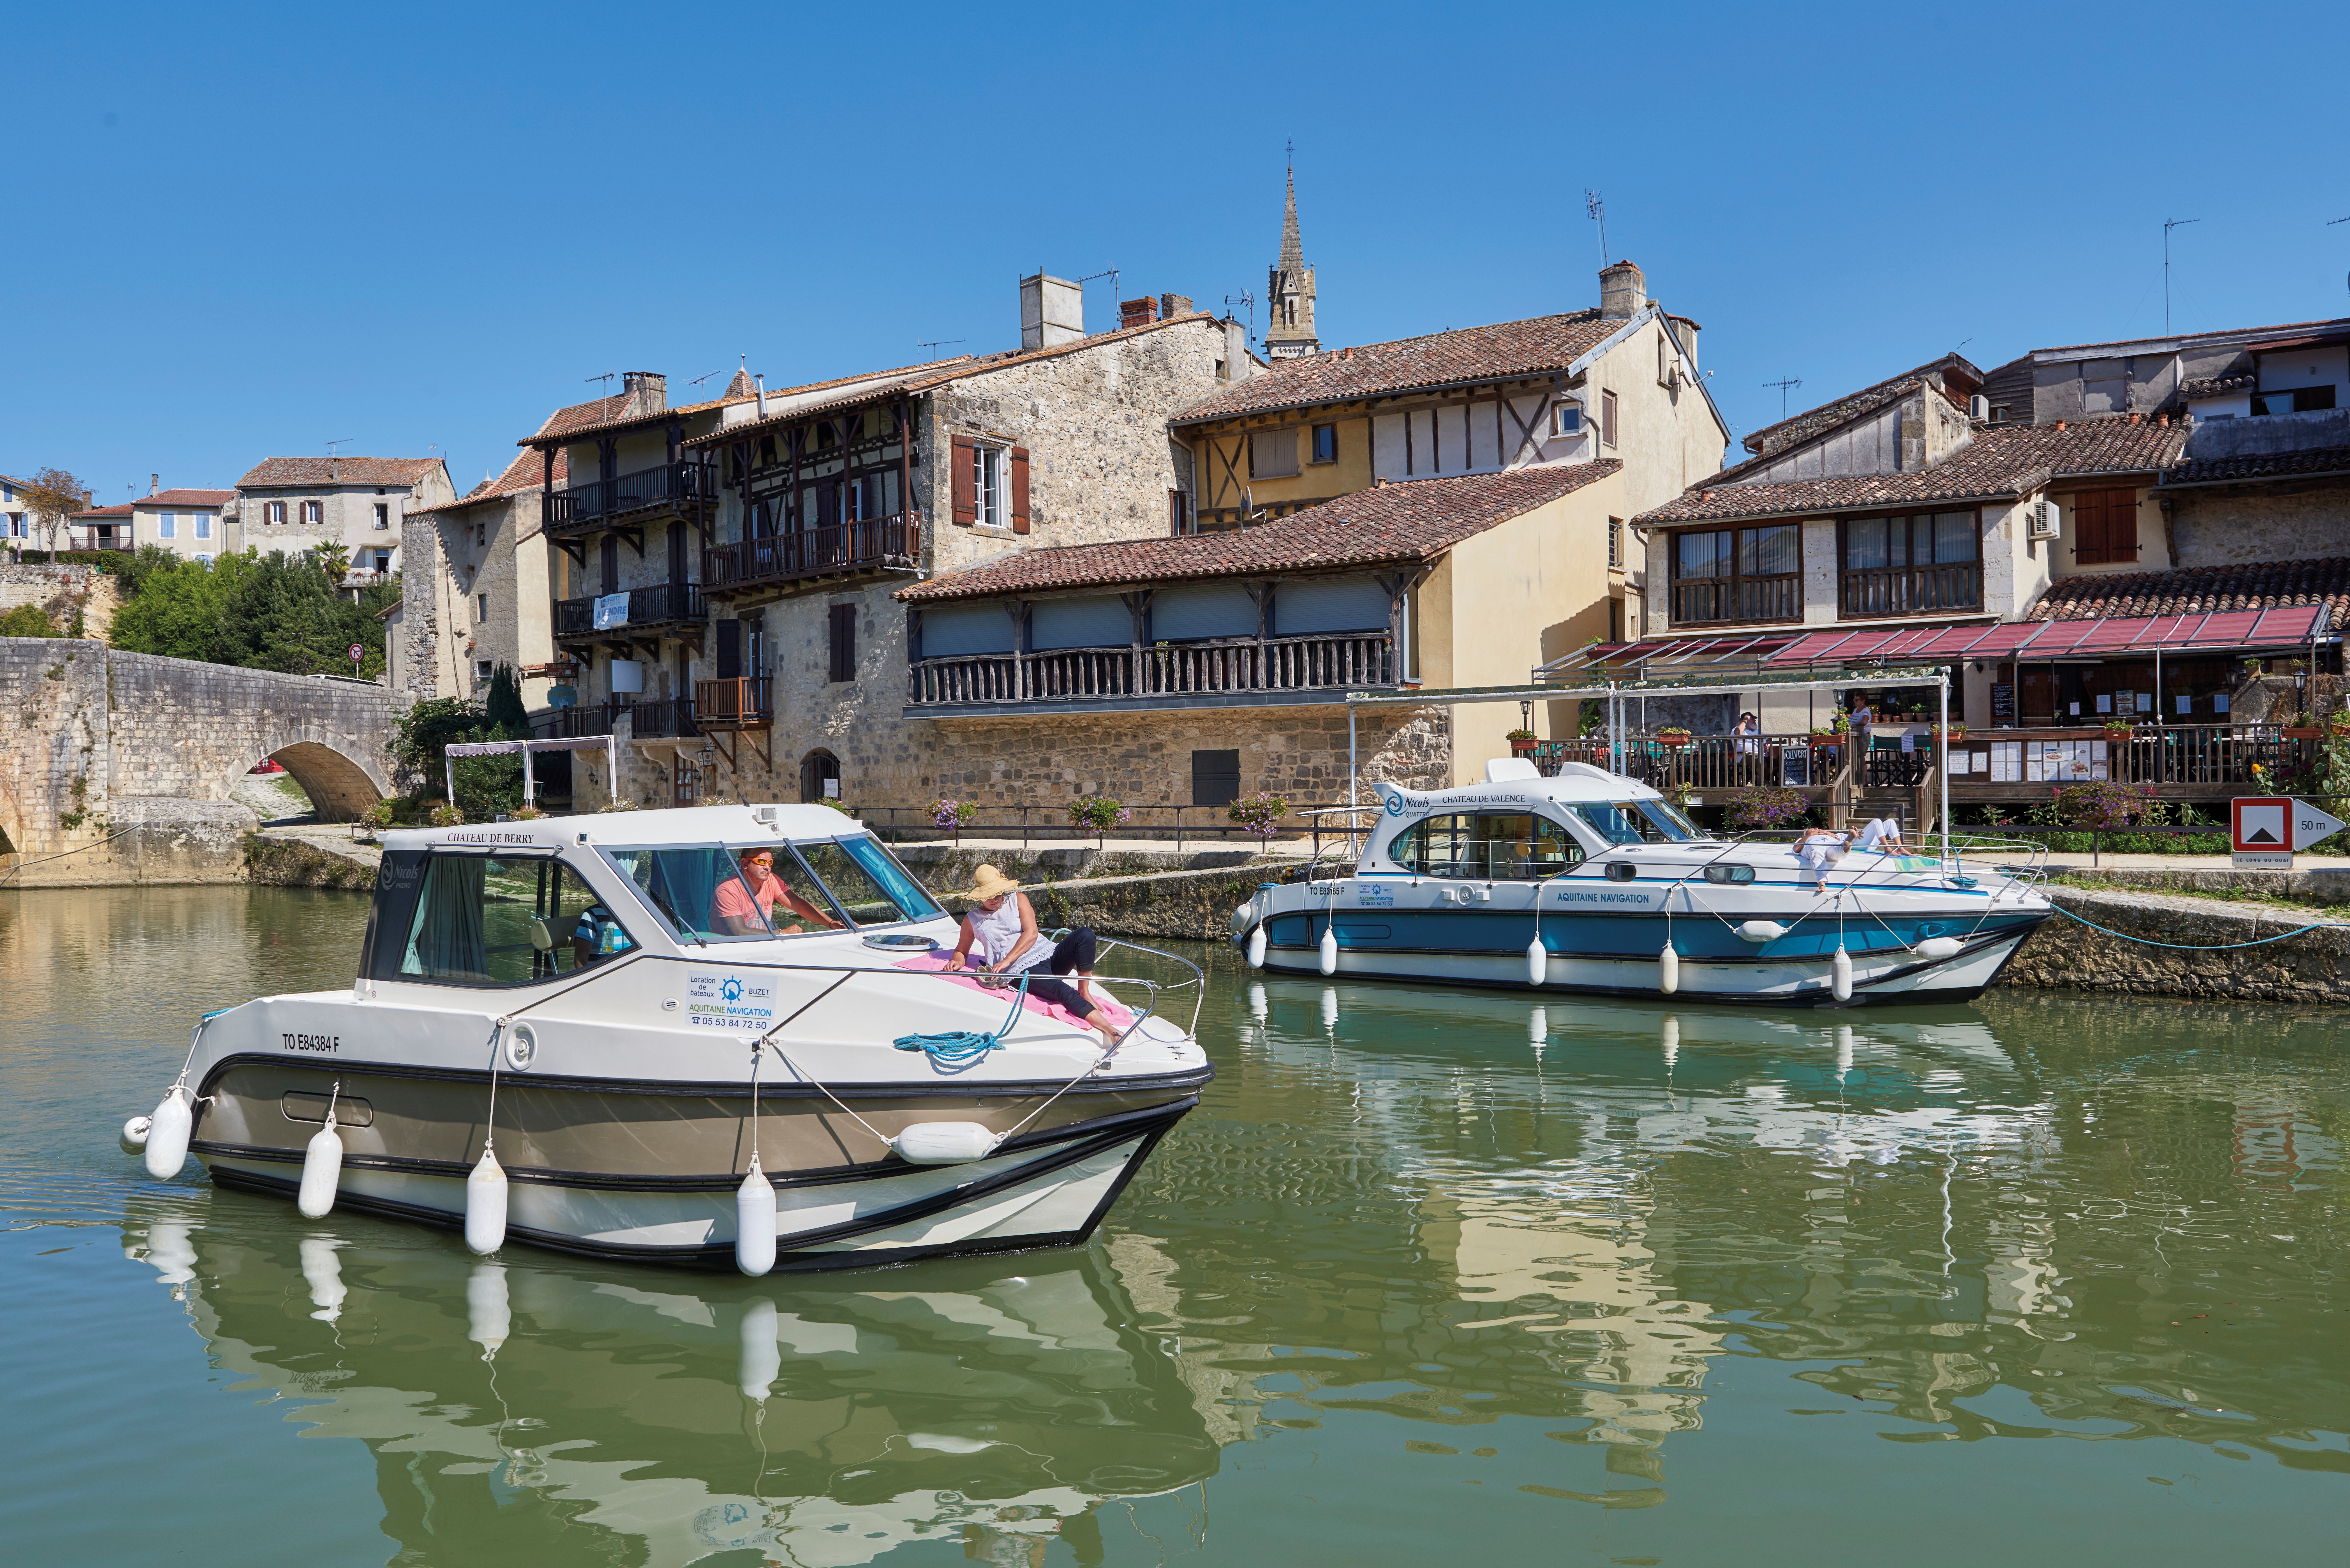 Alquiler de barcos sin carnet para turismo fluvial | Nicols